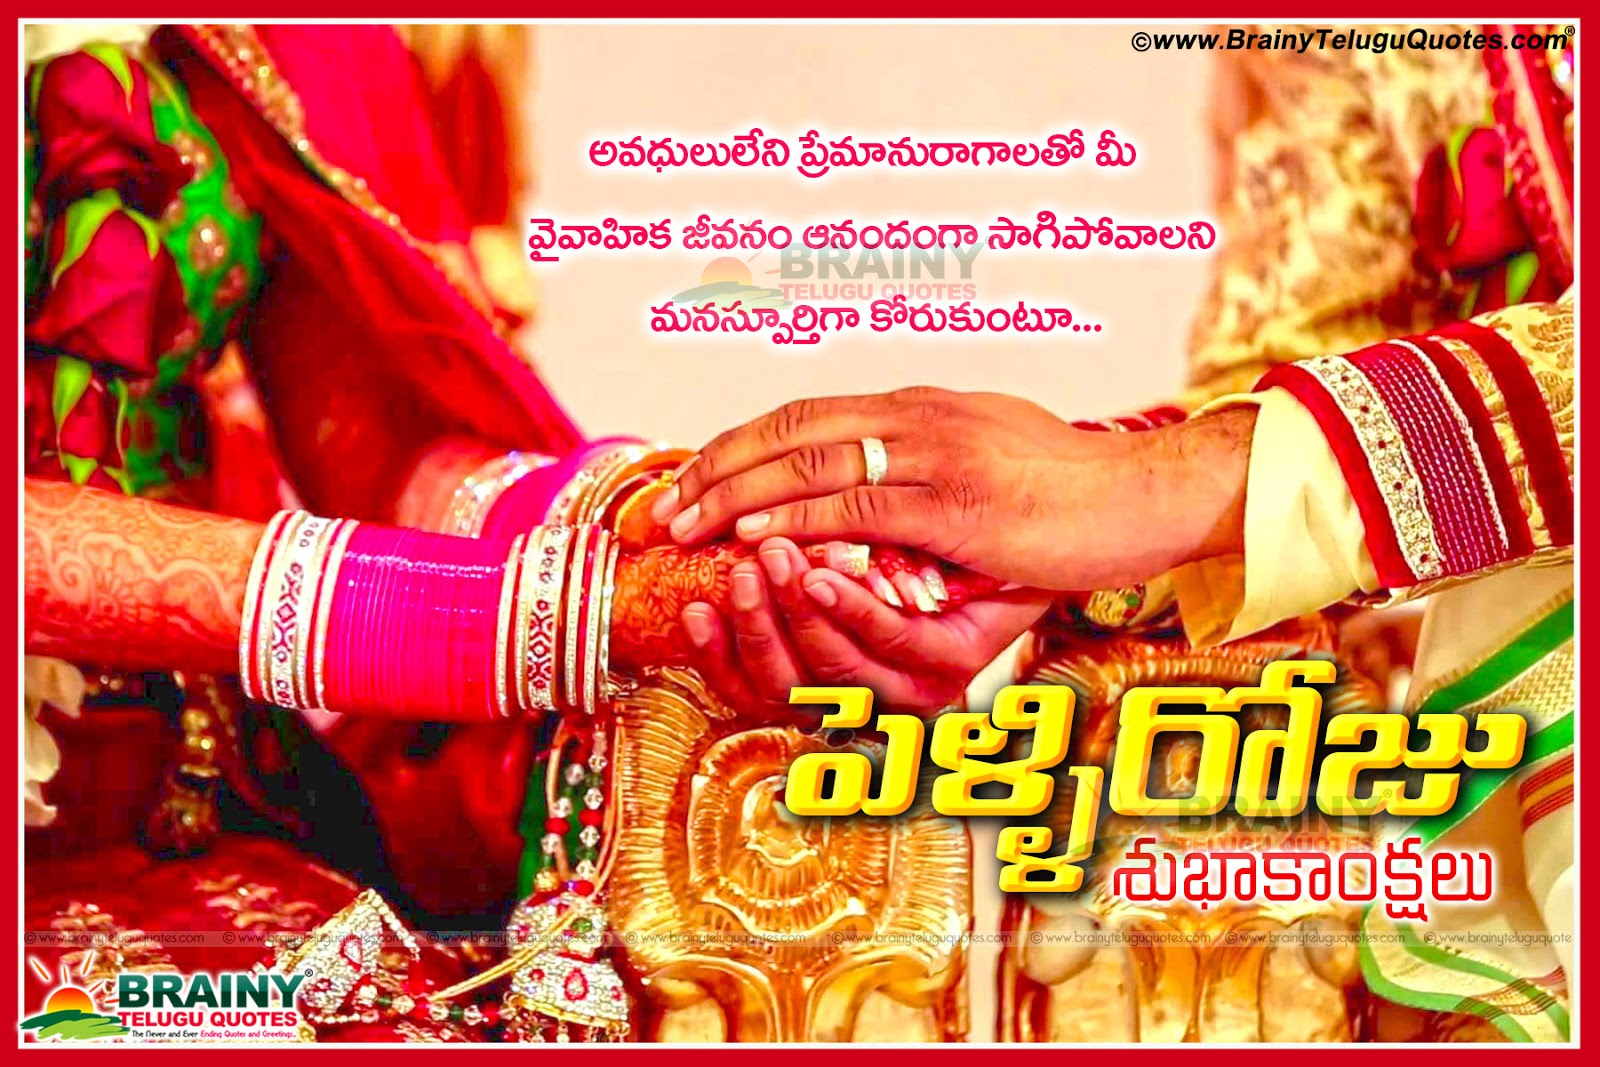 Wedding Anniversary Quotes For Friends In English Telugu marriage day wishes pelliroju subhakankshalu